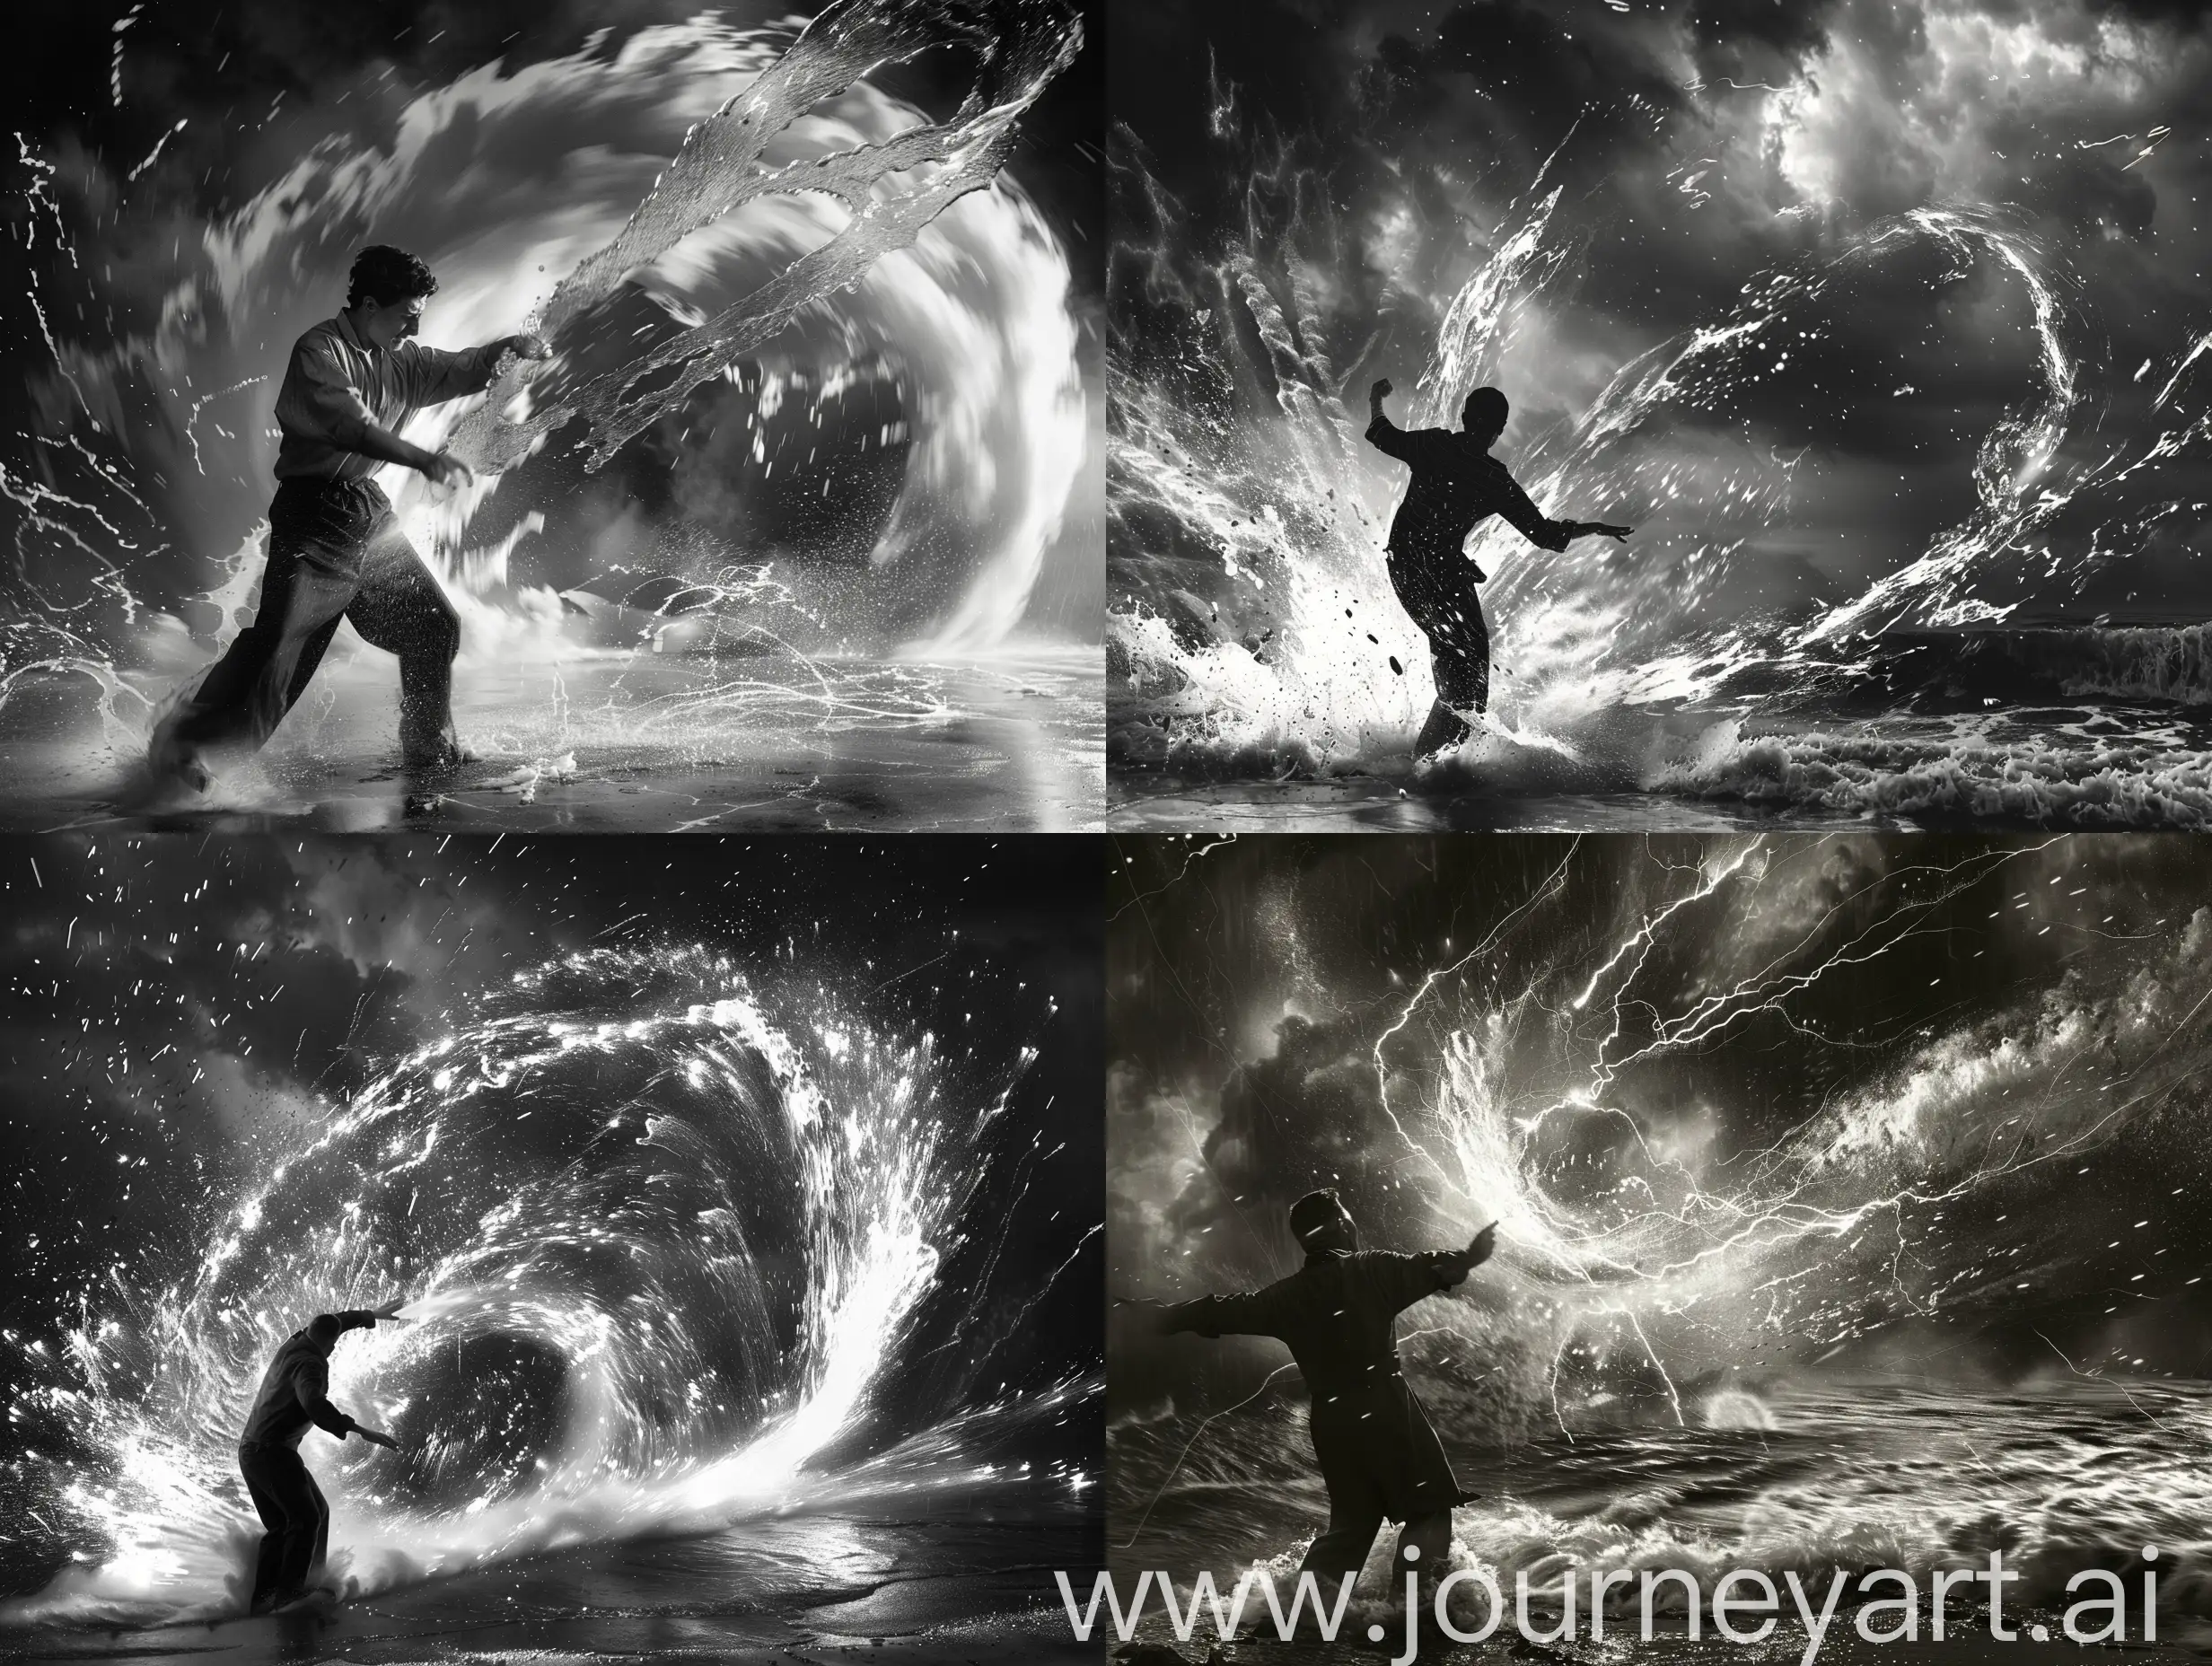 black and white scene, man creating a tornado, dramatic lighting